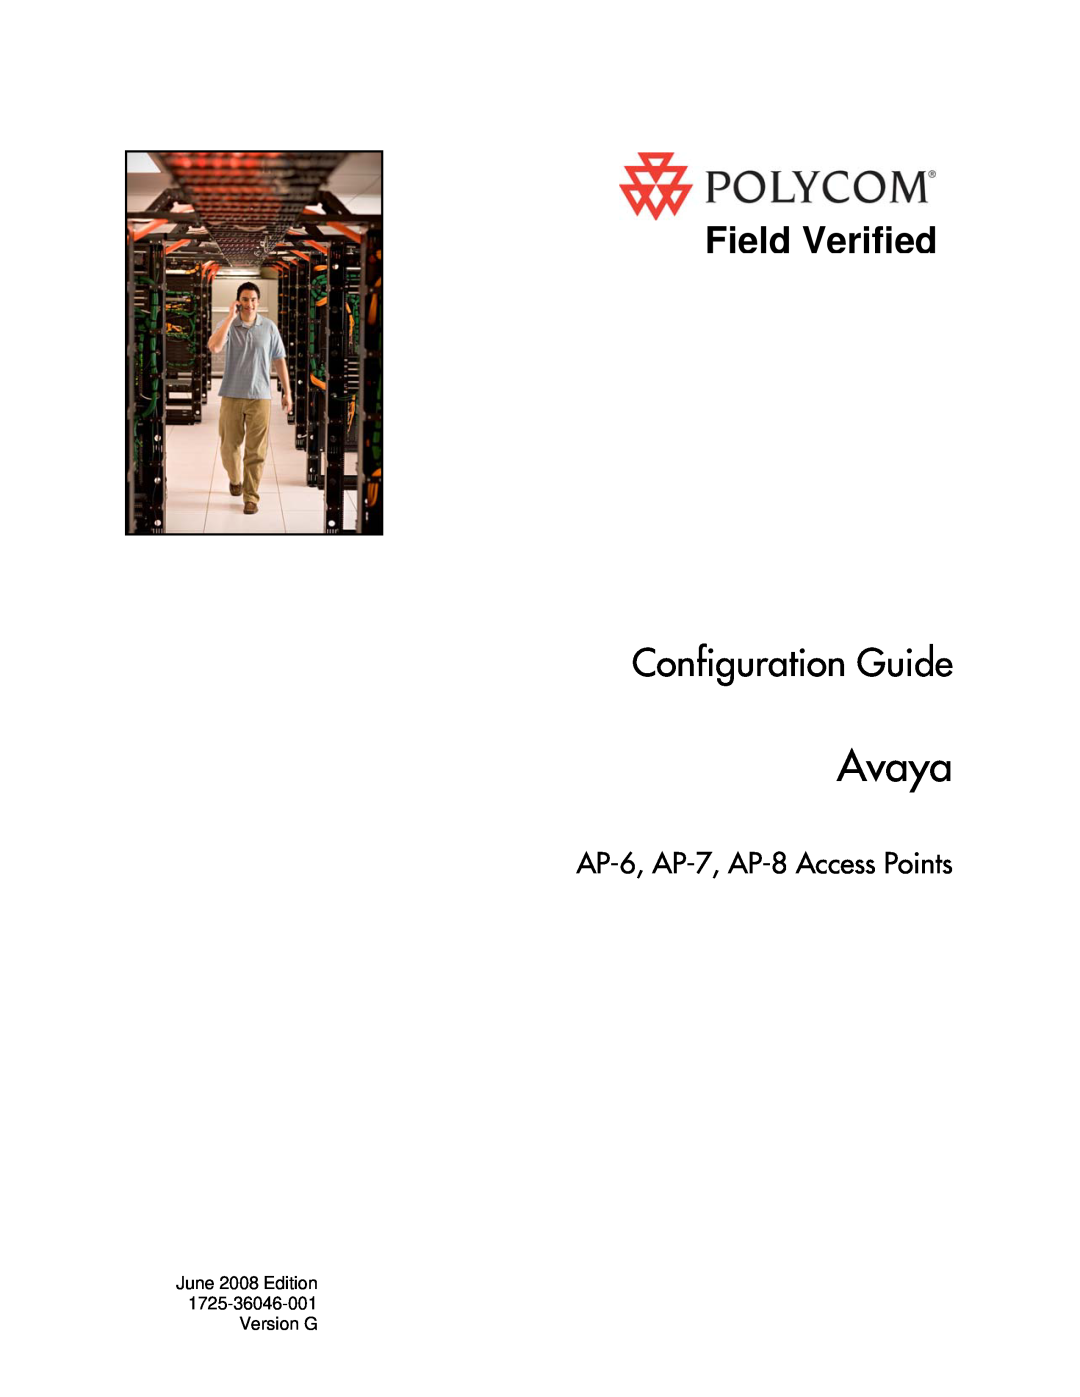 Polycom manual Avaya, Field Verified, Configuration Guide, AP-6, AP-7, AP-8 Access Points 